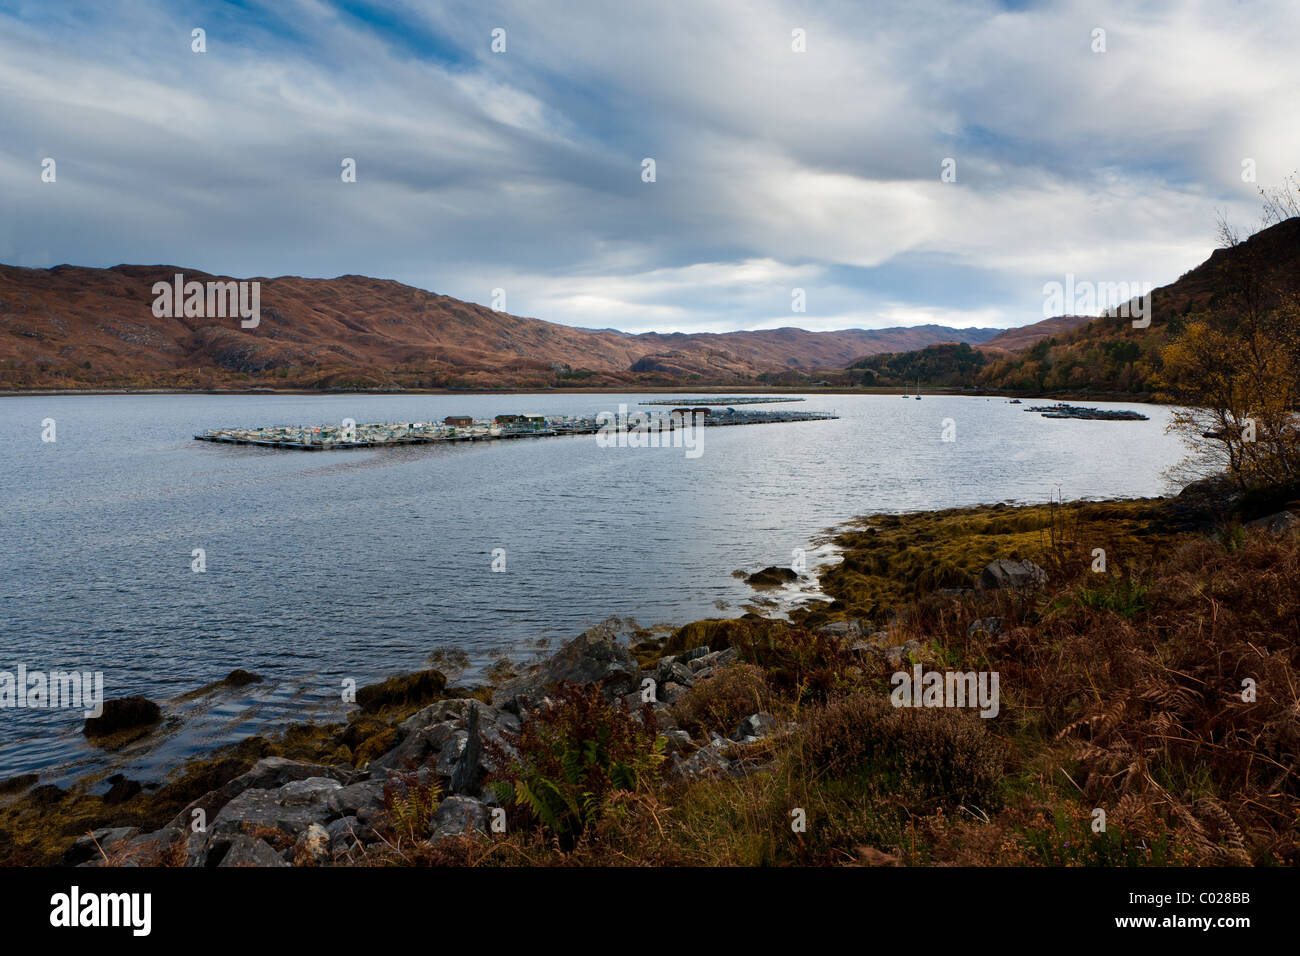 Fish farm moored in Loch Ailort. Stock Photo